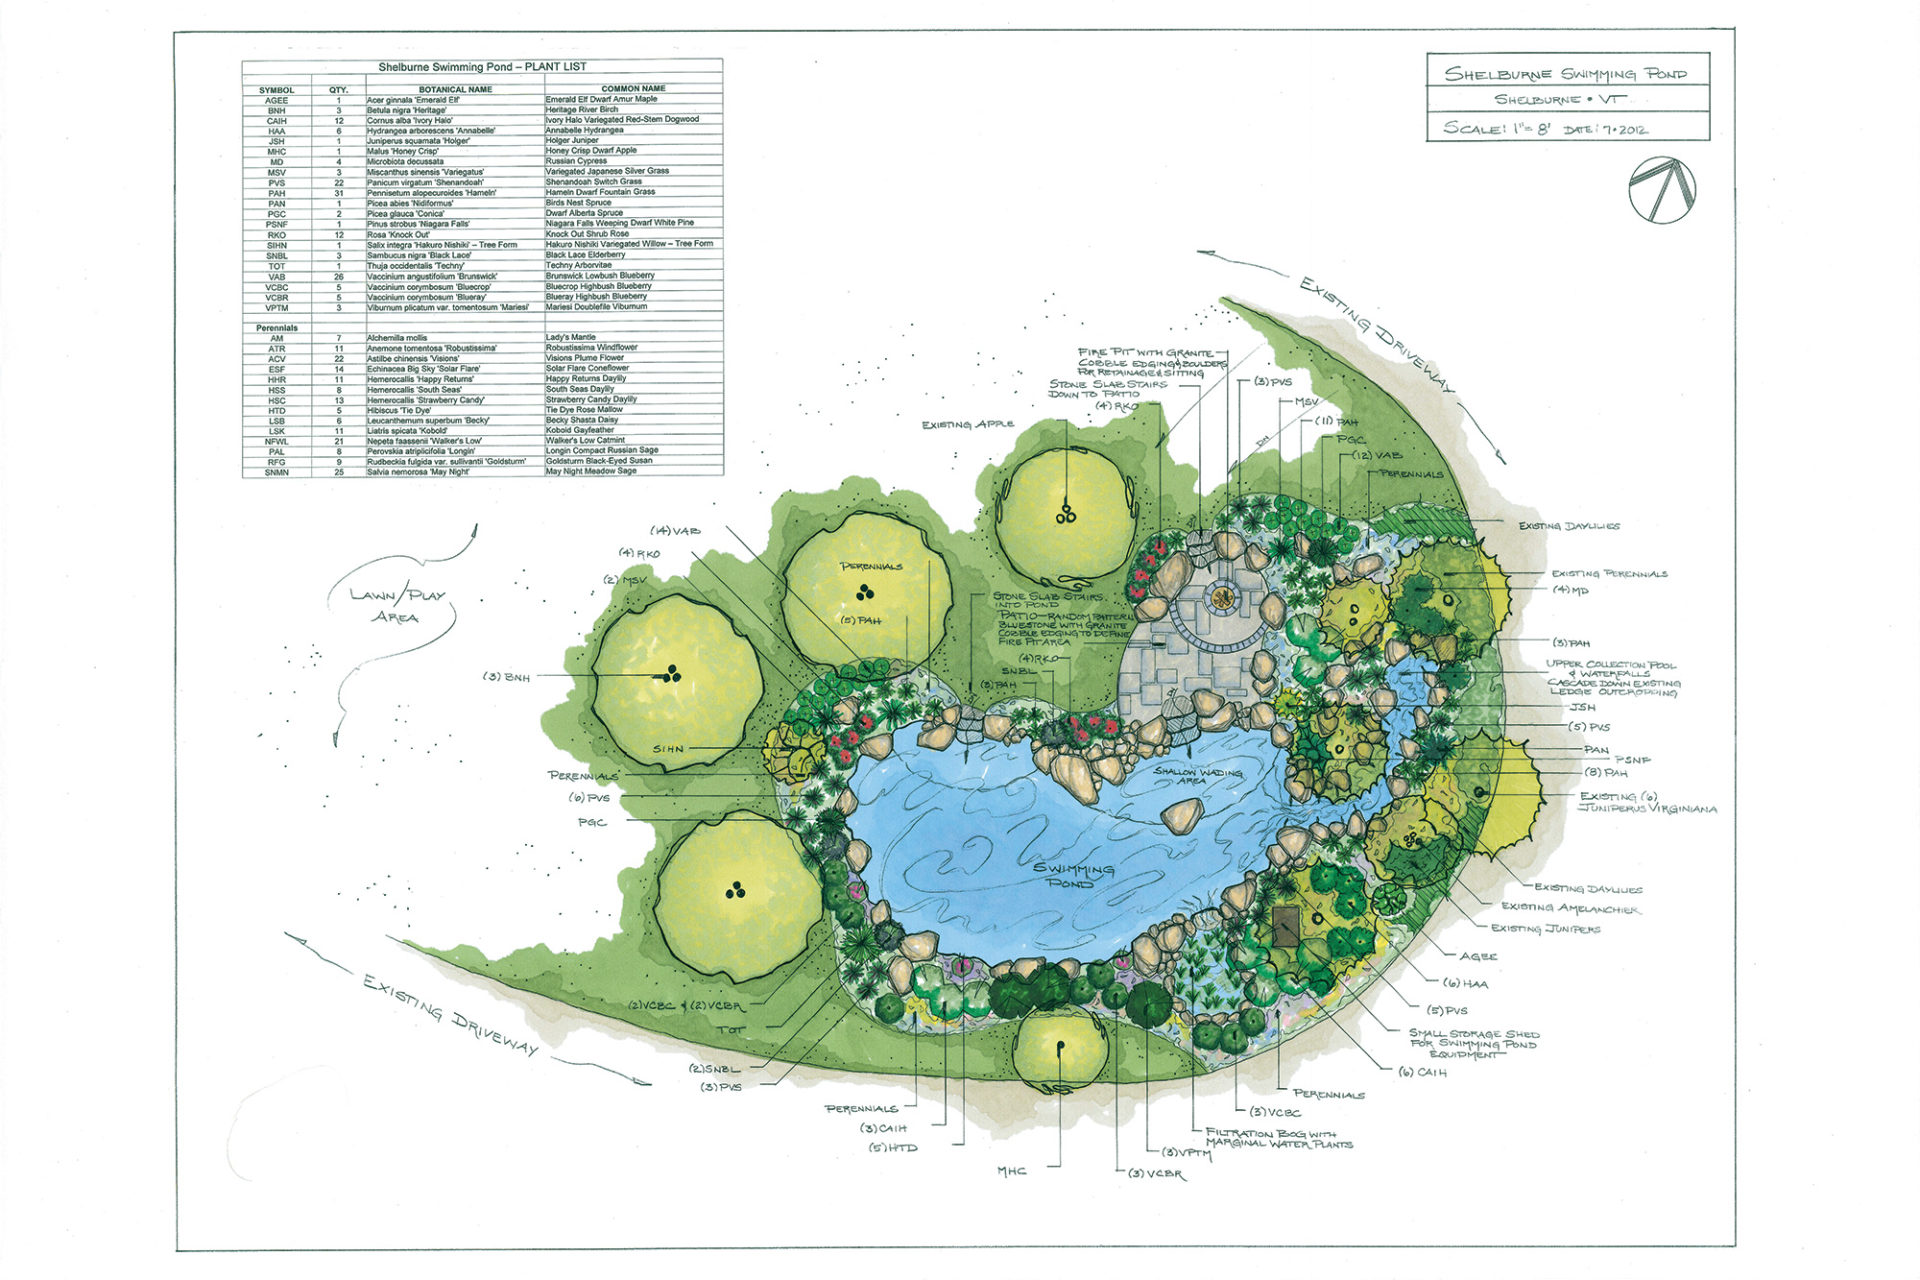 Shelburne Swimming Pond landscaping design plan